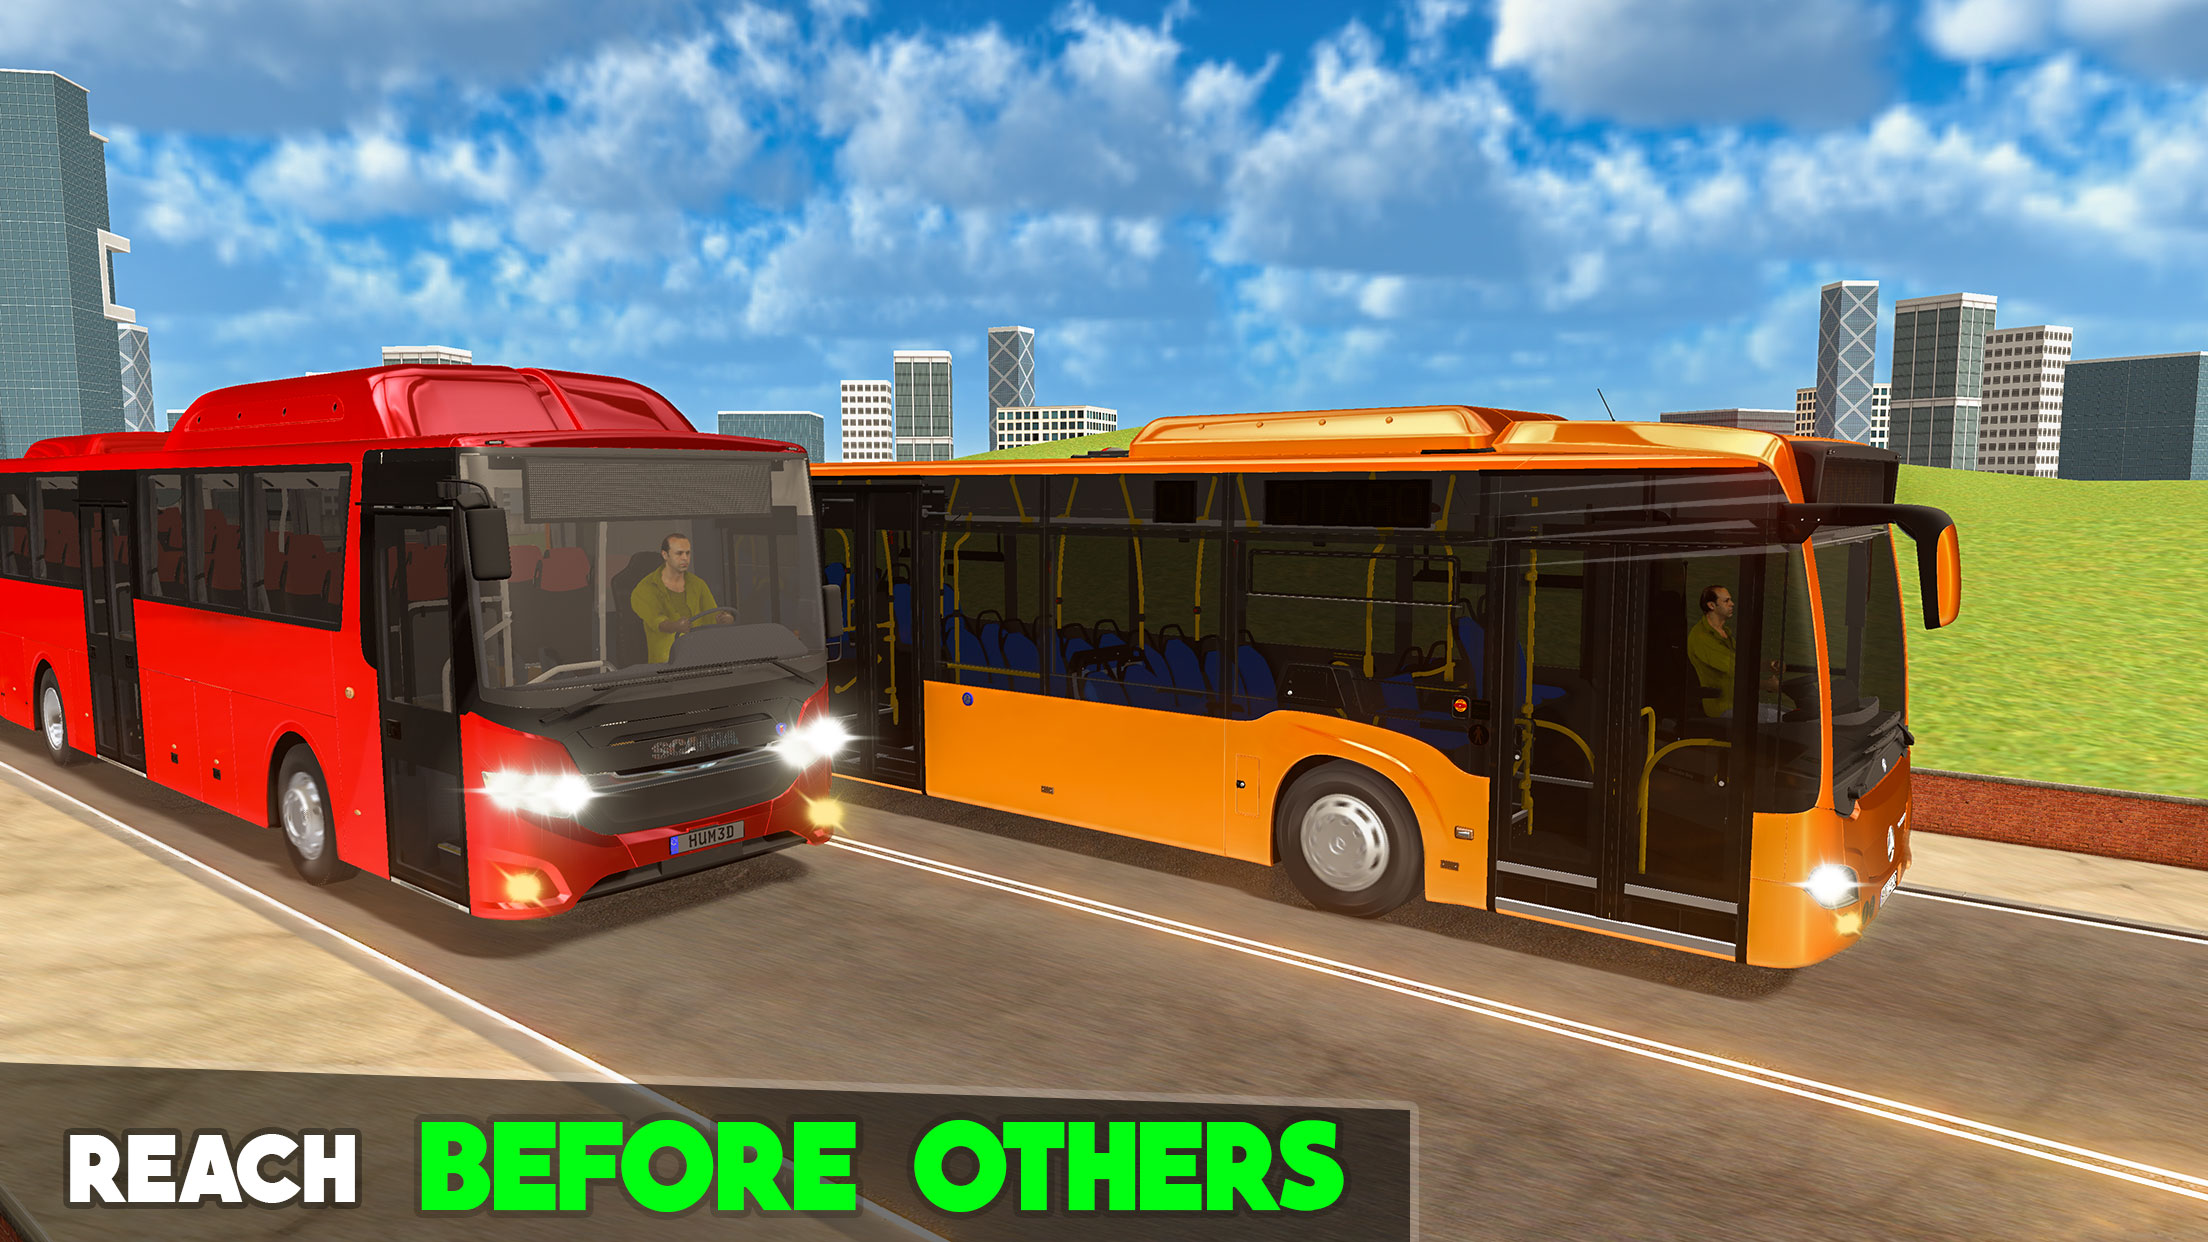 Coach Bus Simulator 3D - New City Bus Game 2020